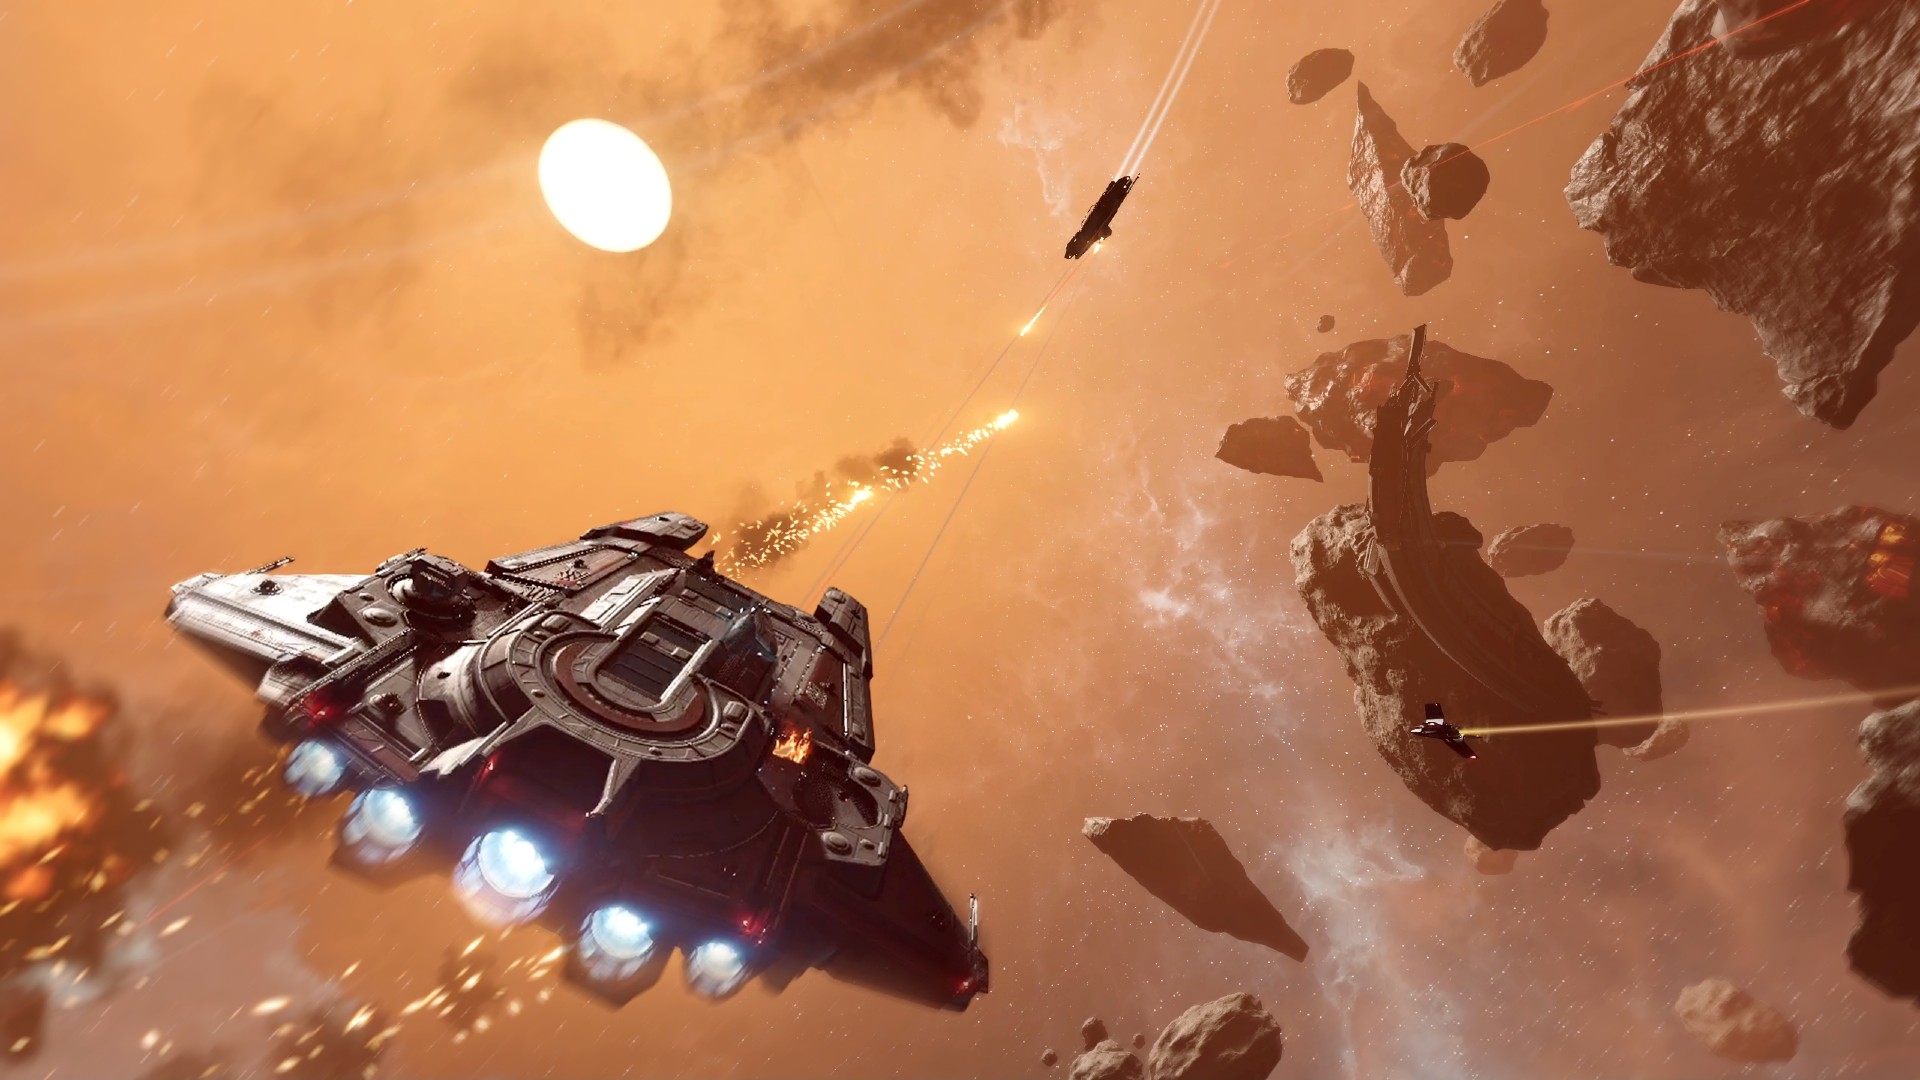 Jump Ship Steam FPS game: A space battle in Steam FPS game Jump Ship